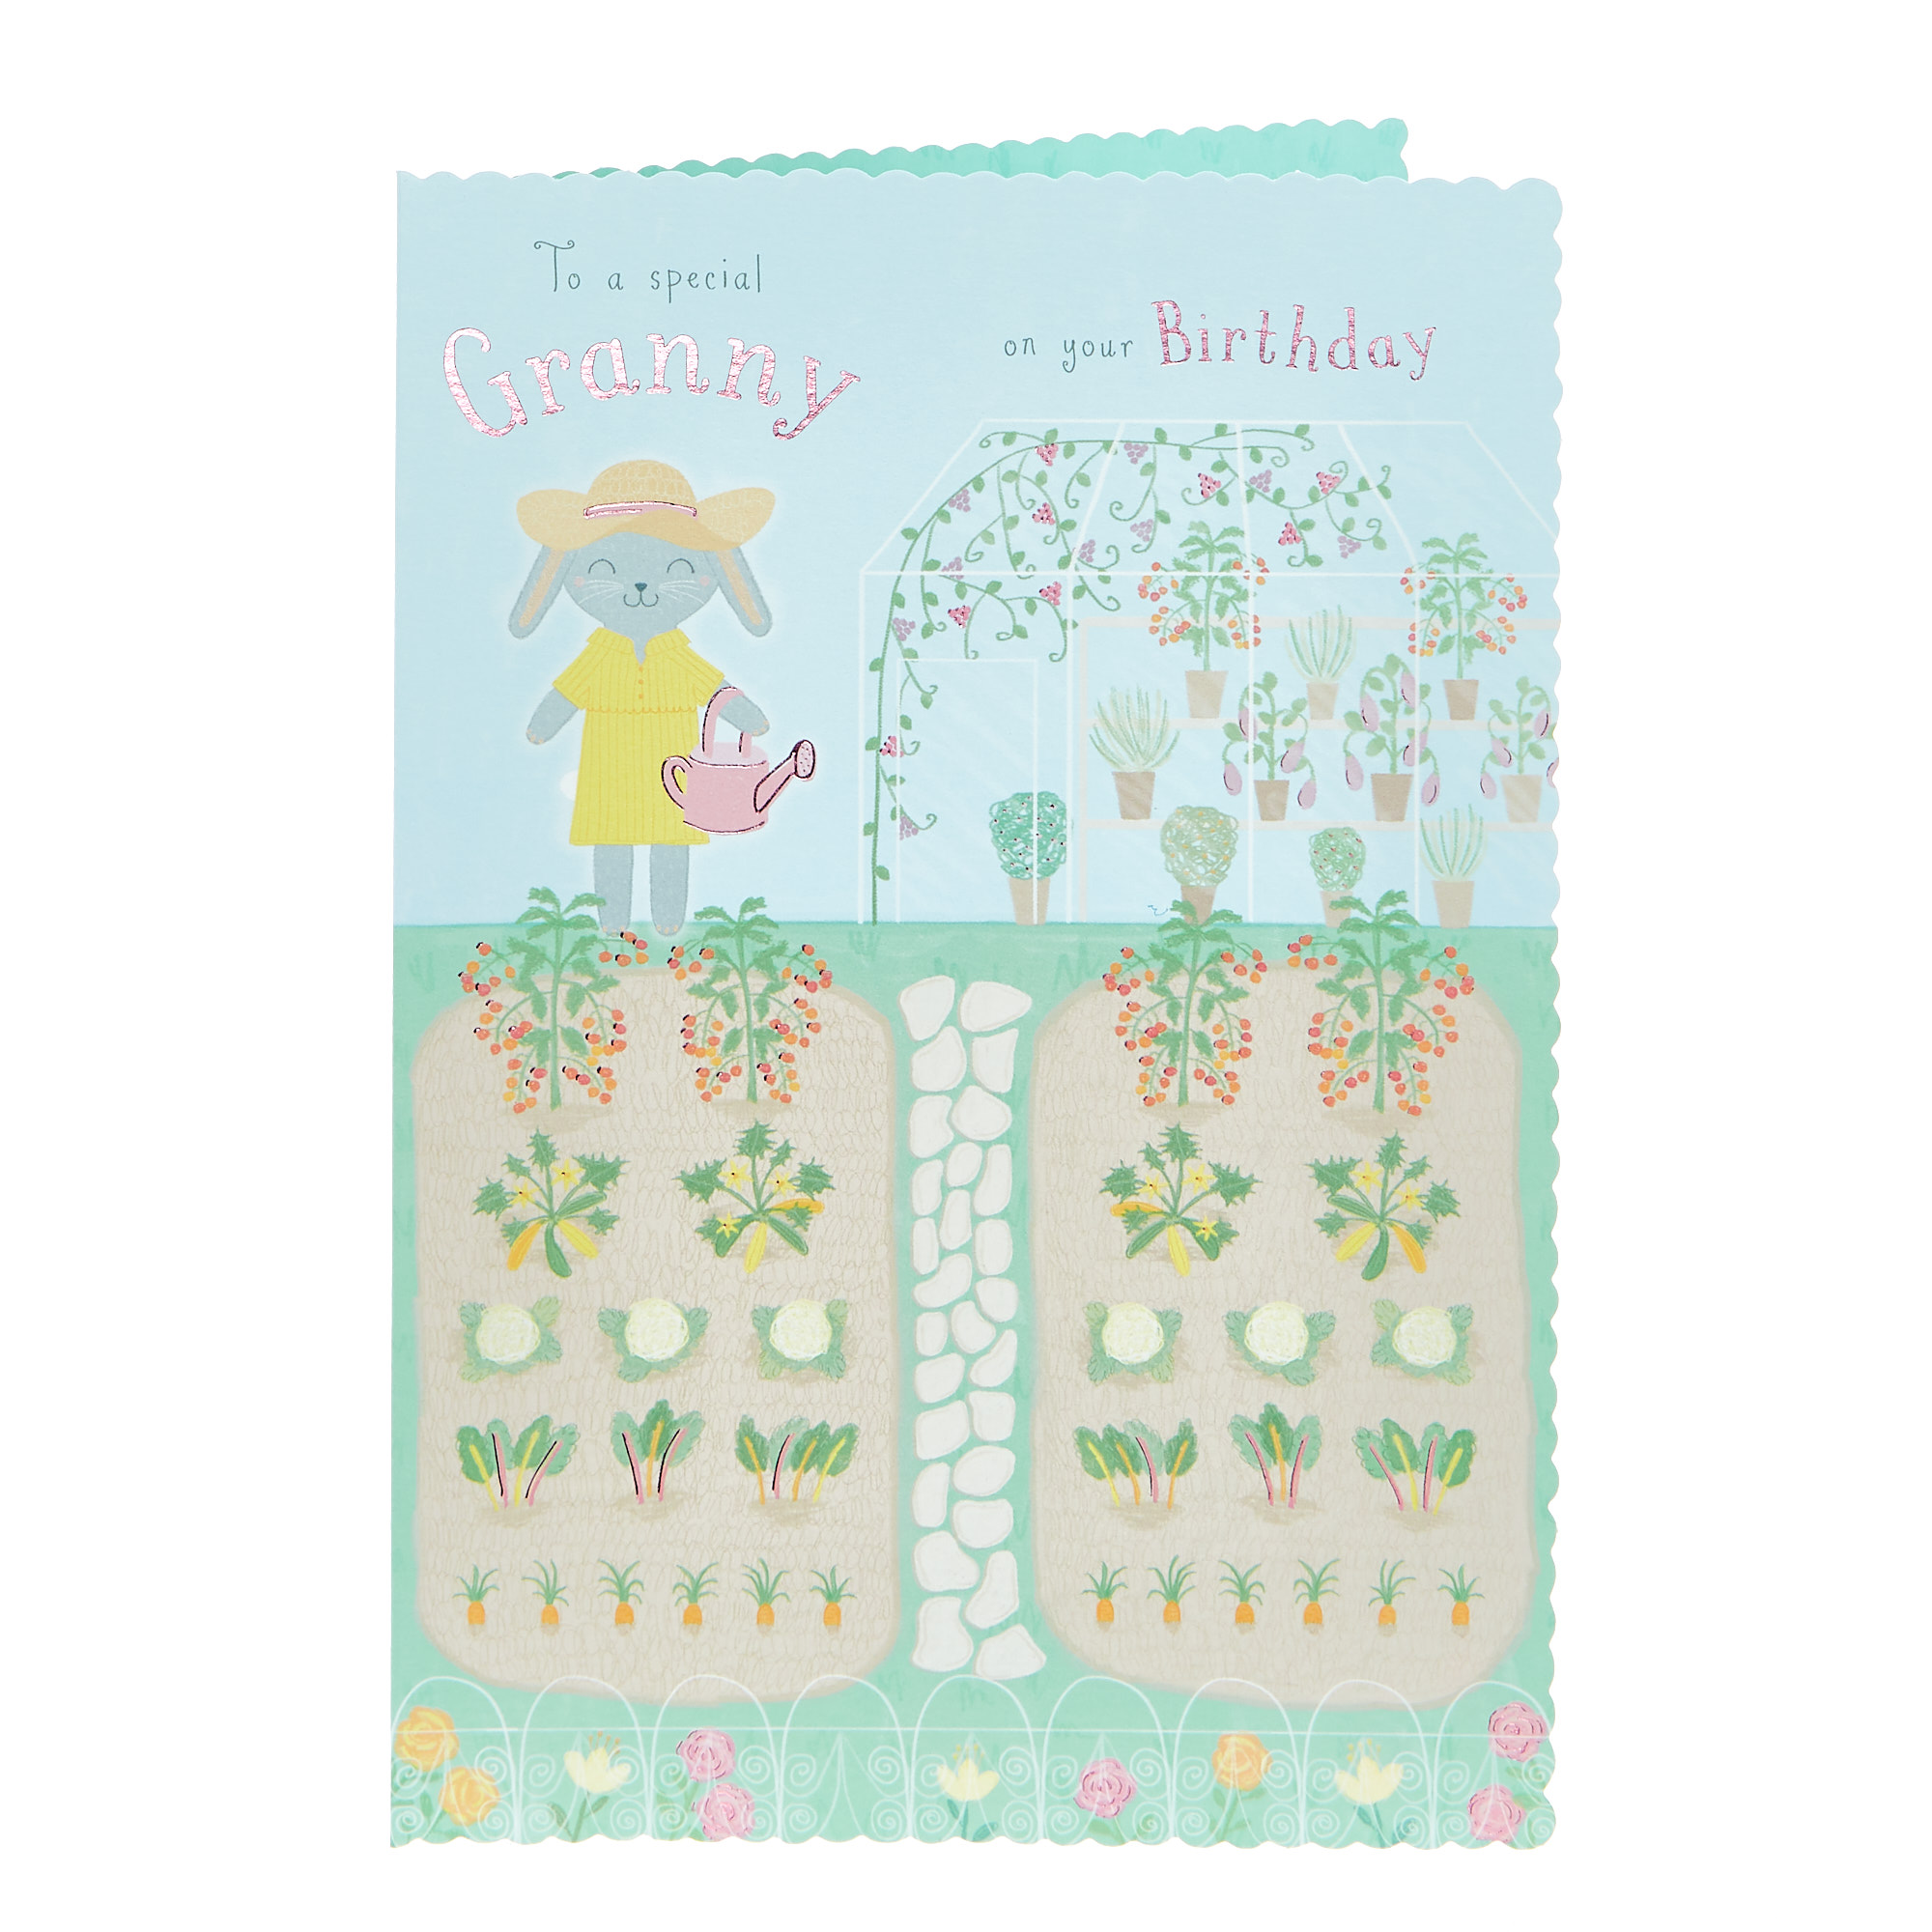 Birthday Card - Special Granny, Gardening